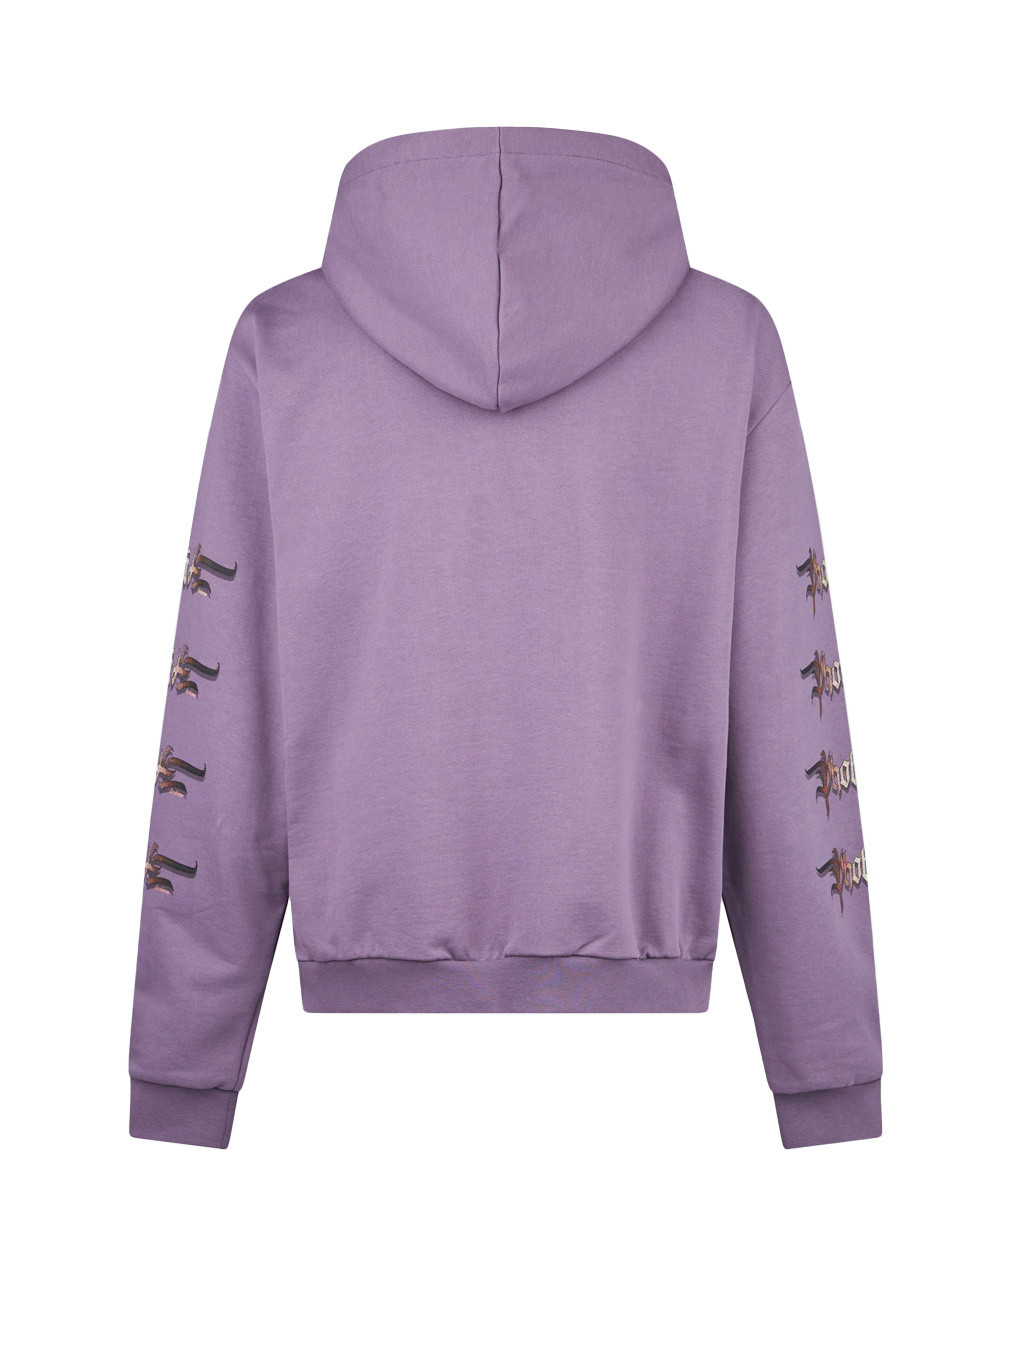 Phobia - Cotton sweatshirt with shark print, Purple, large image number 3